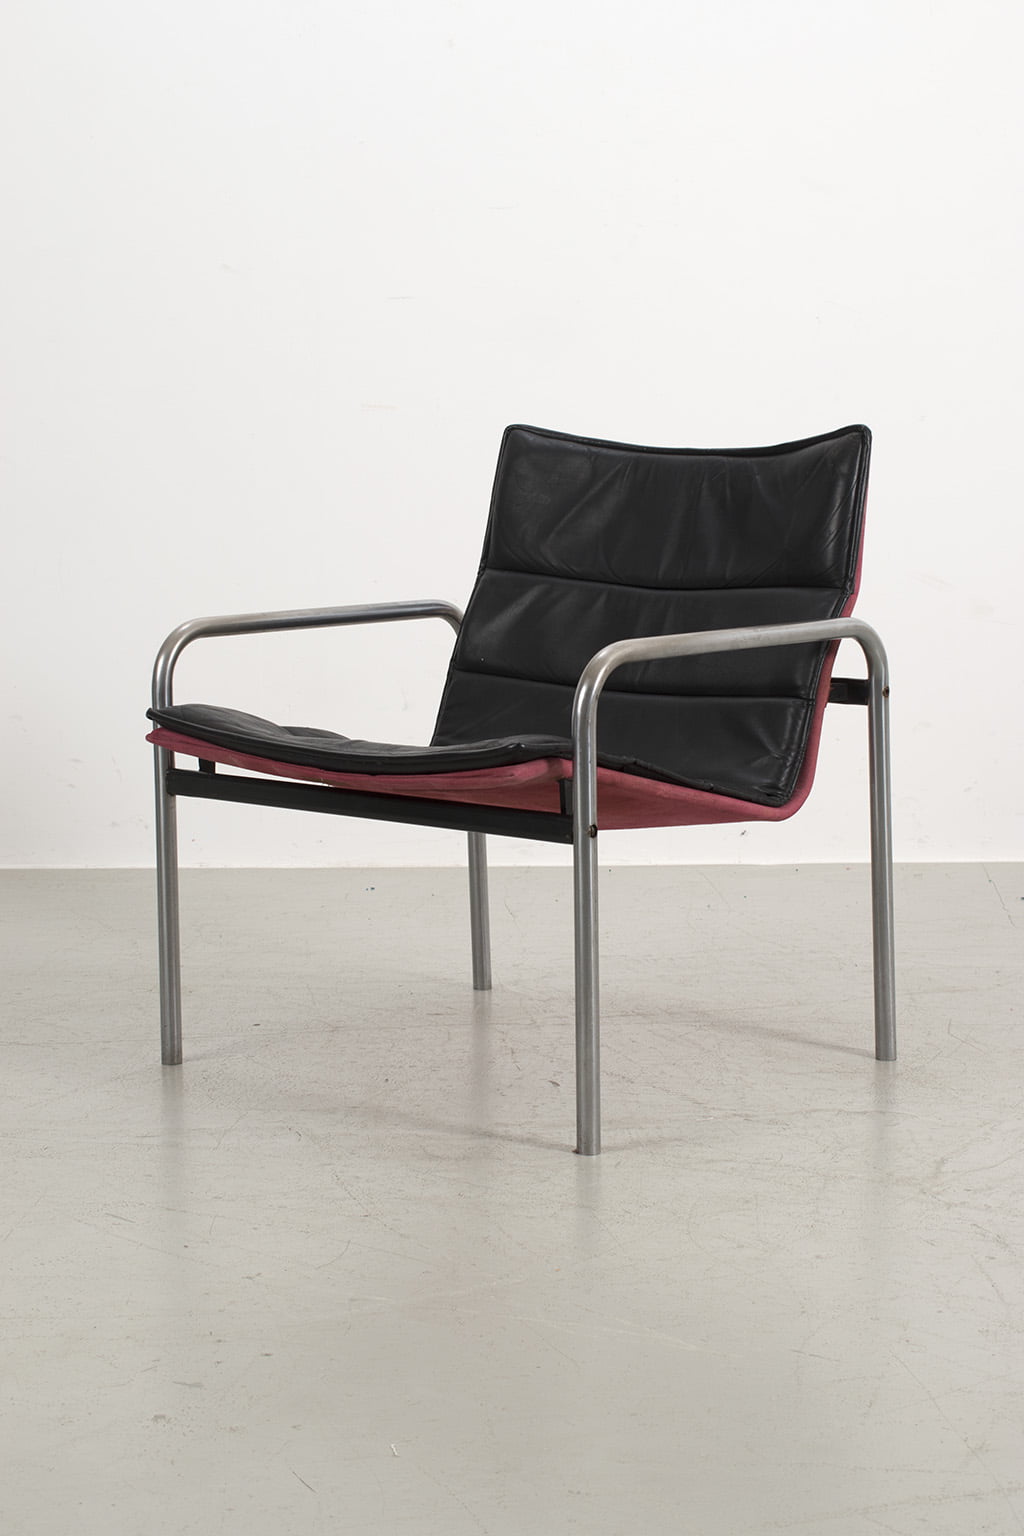 Dutch Design; Ultrex chair